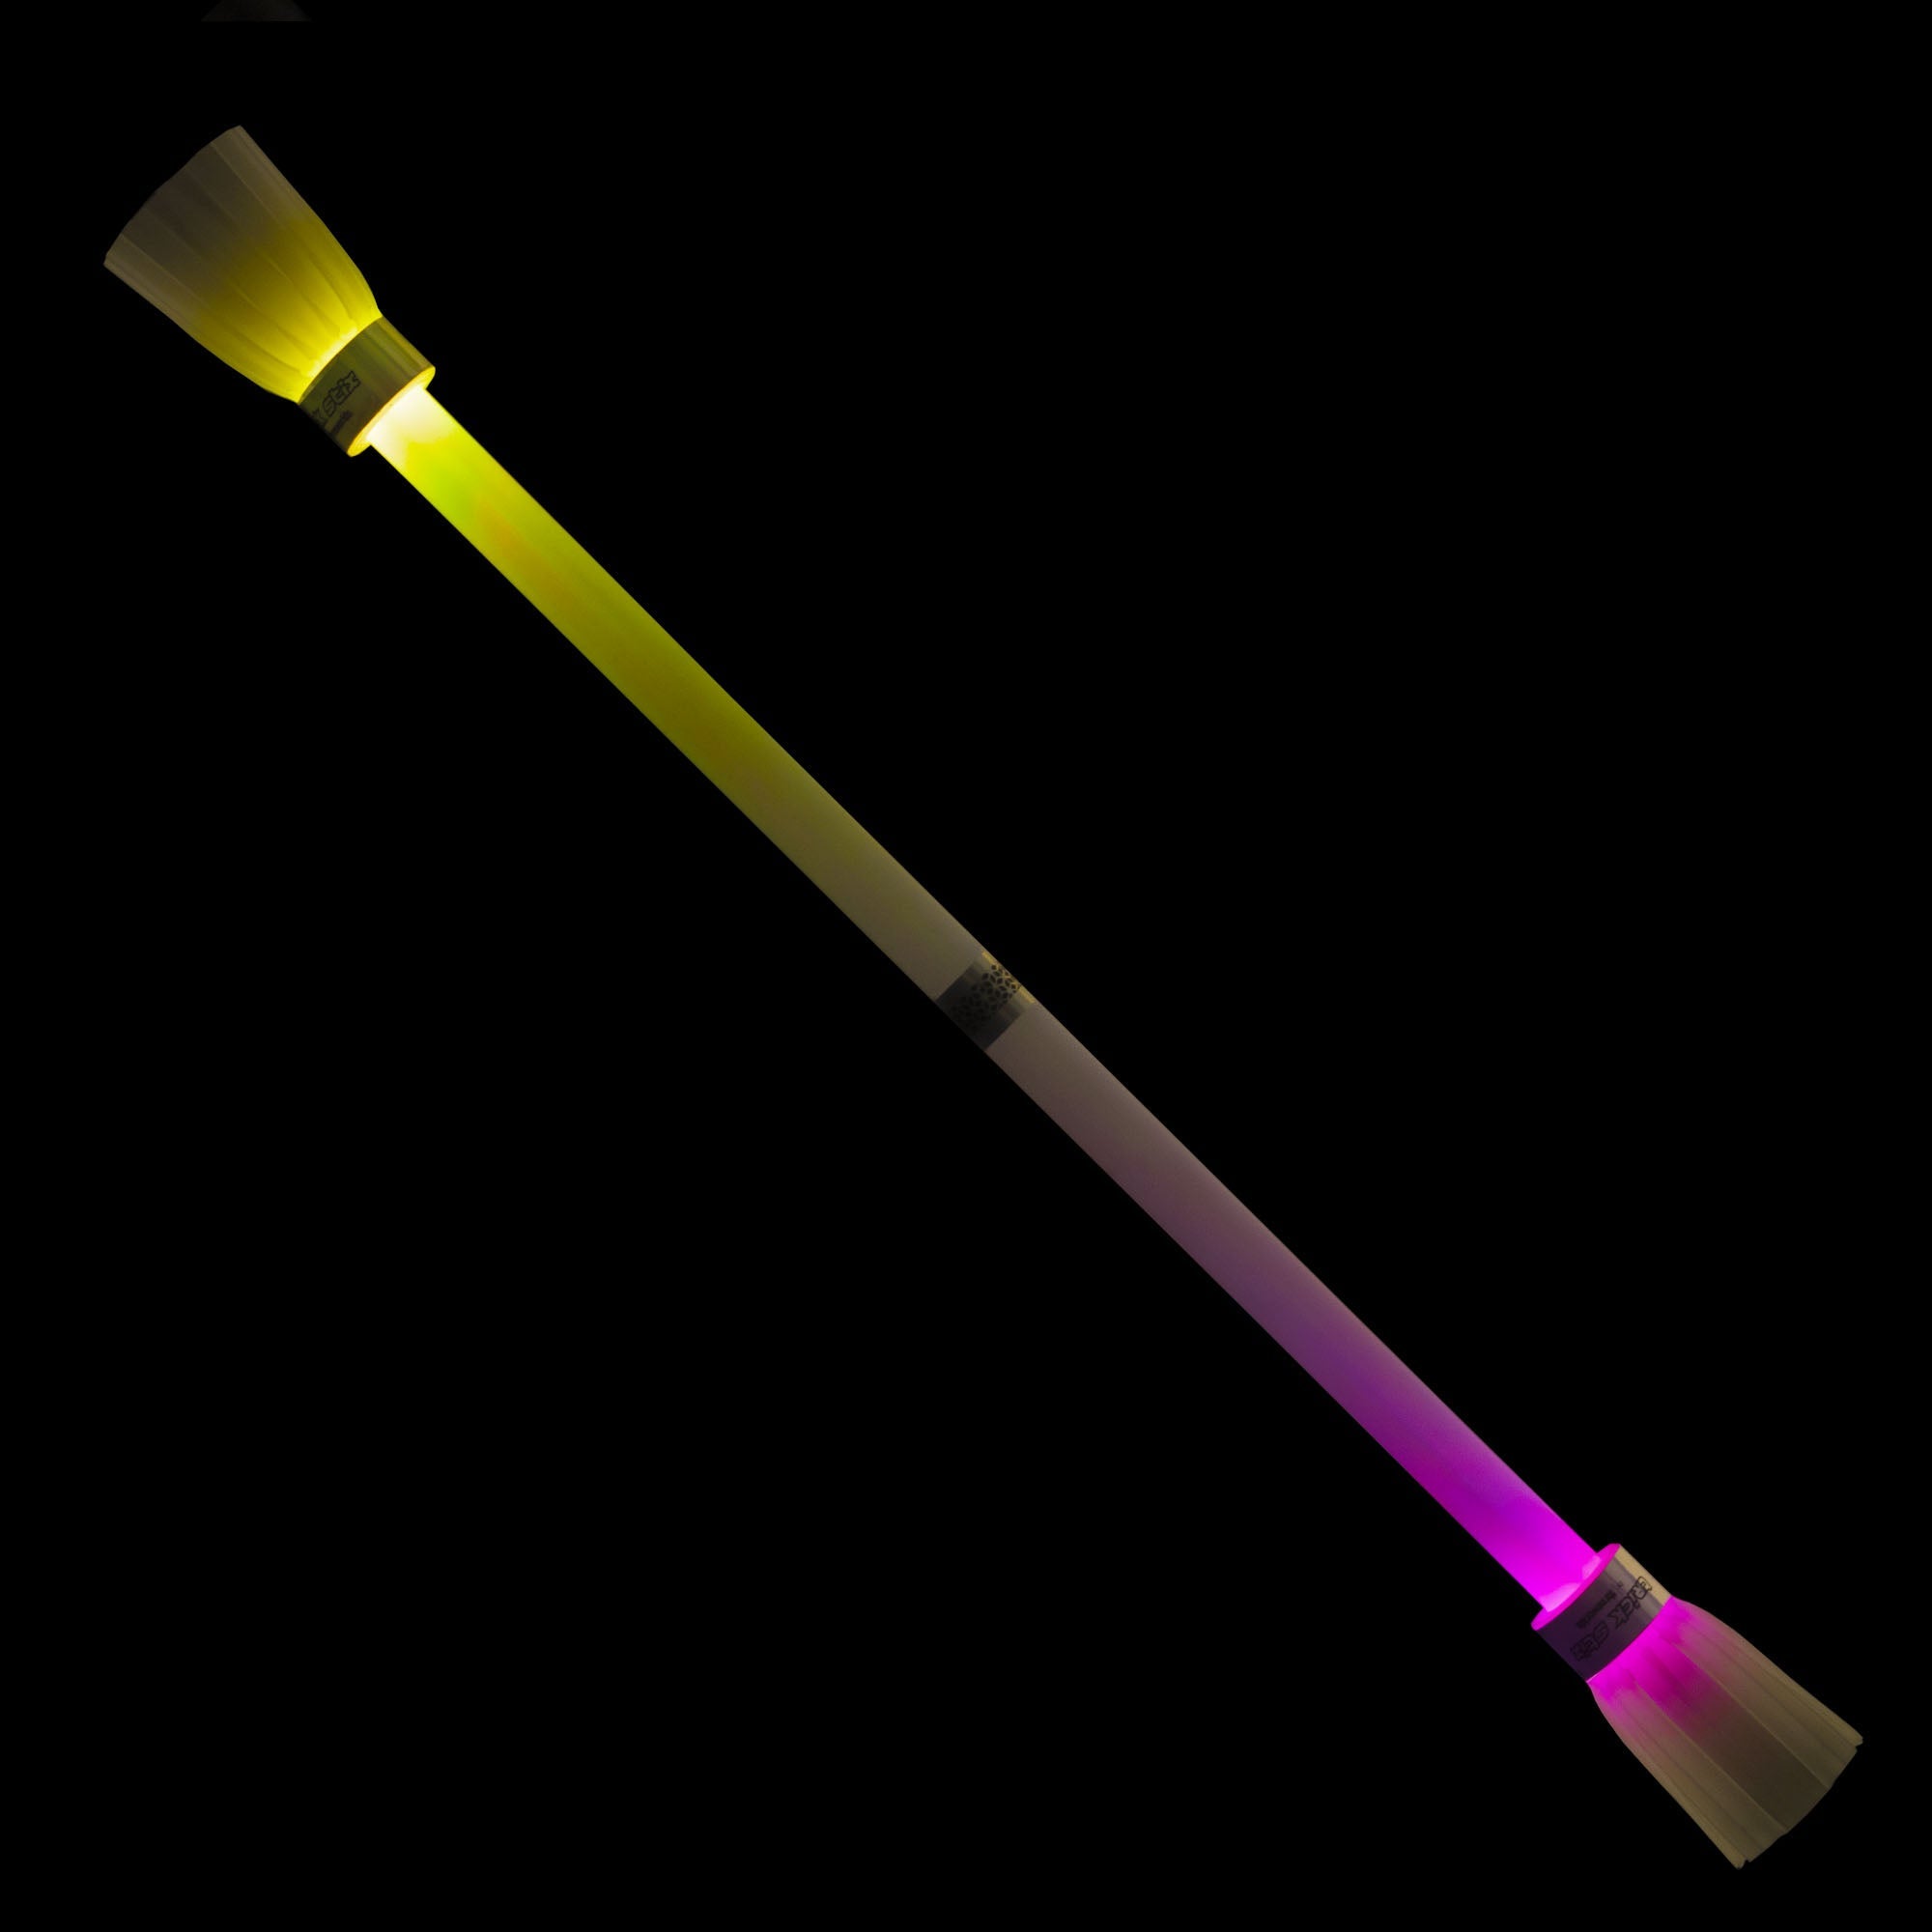 LUMI LED flowerstick glowing with 1 yellow light and 1 purple light